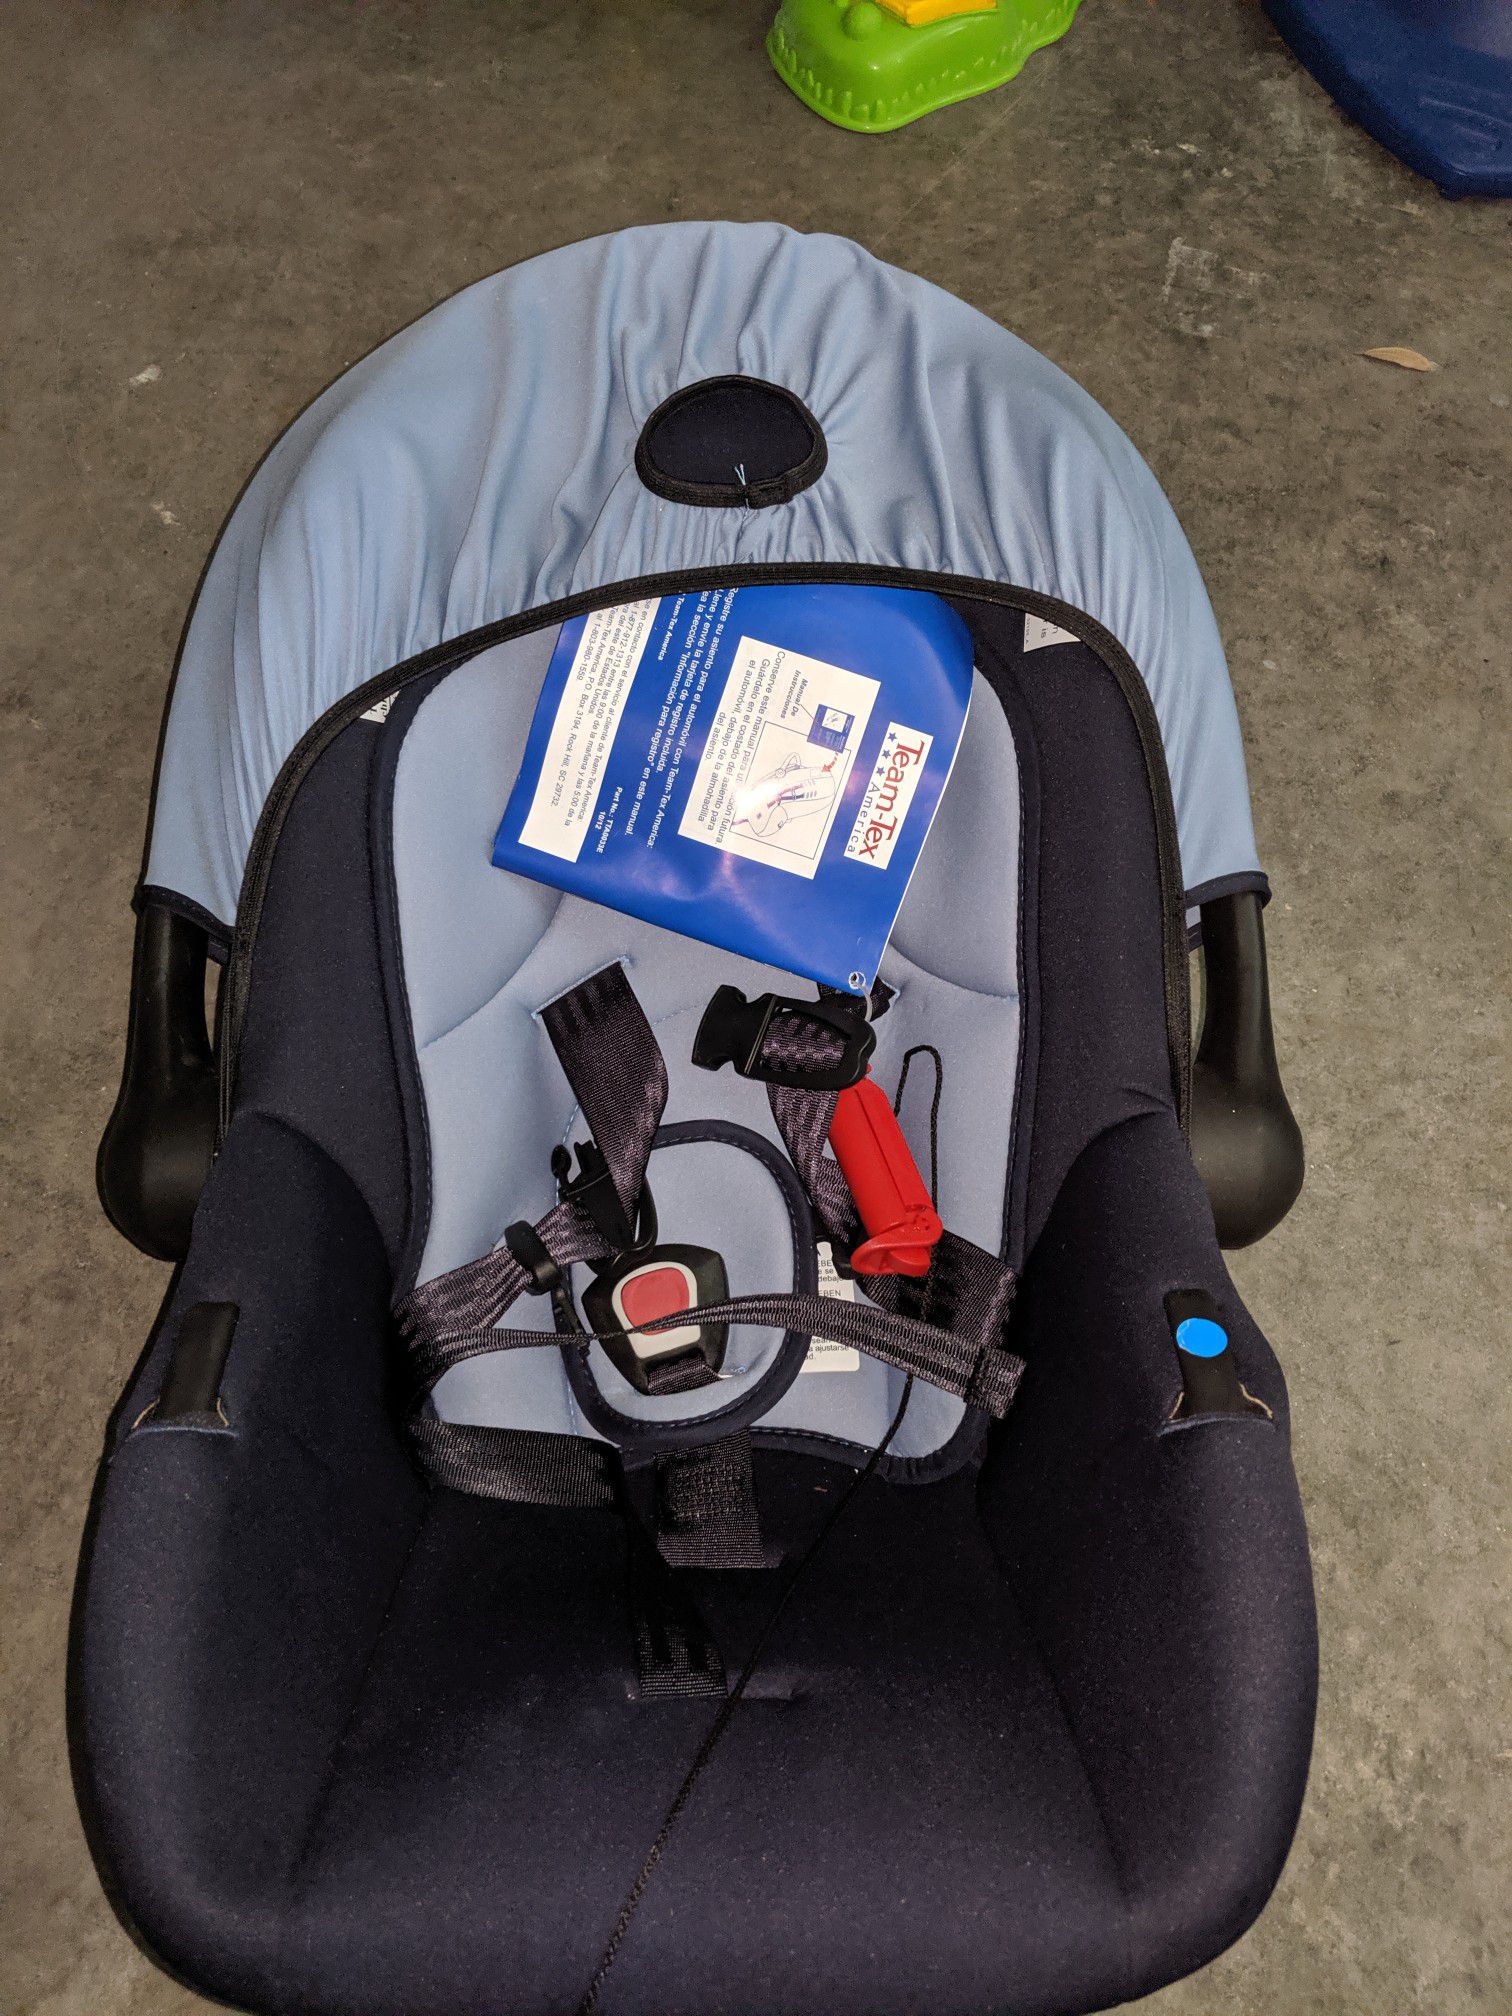 Brand new infant car seat